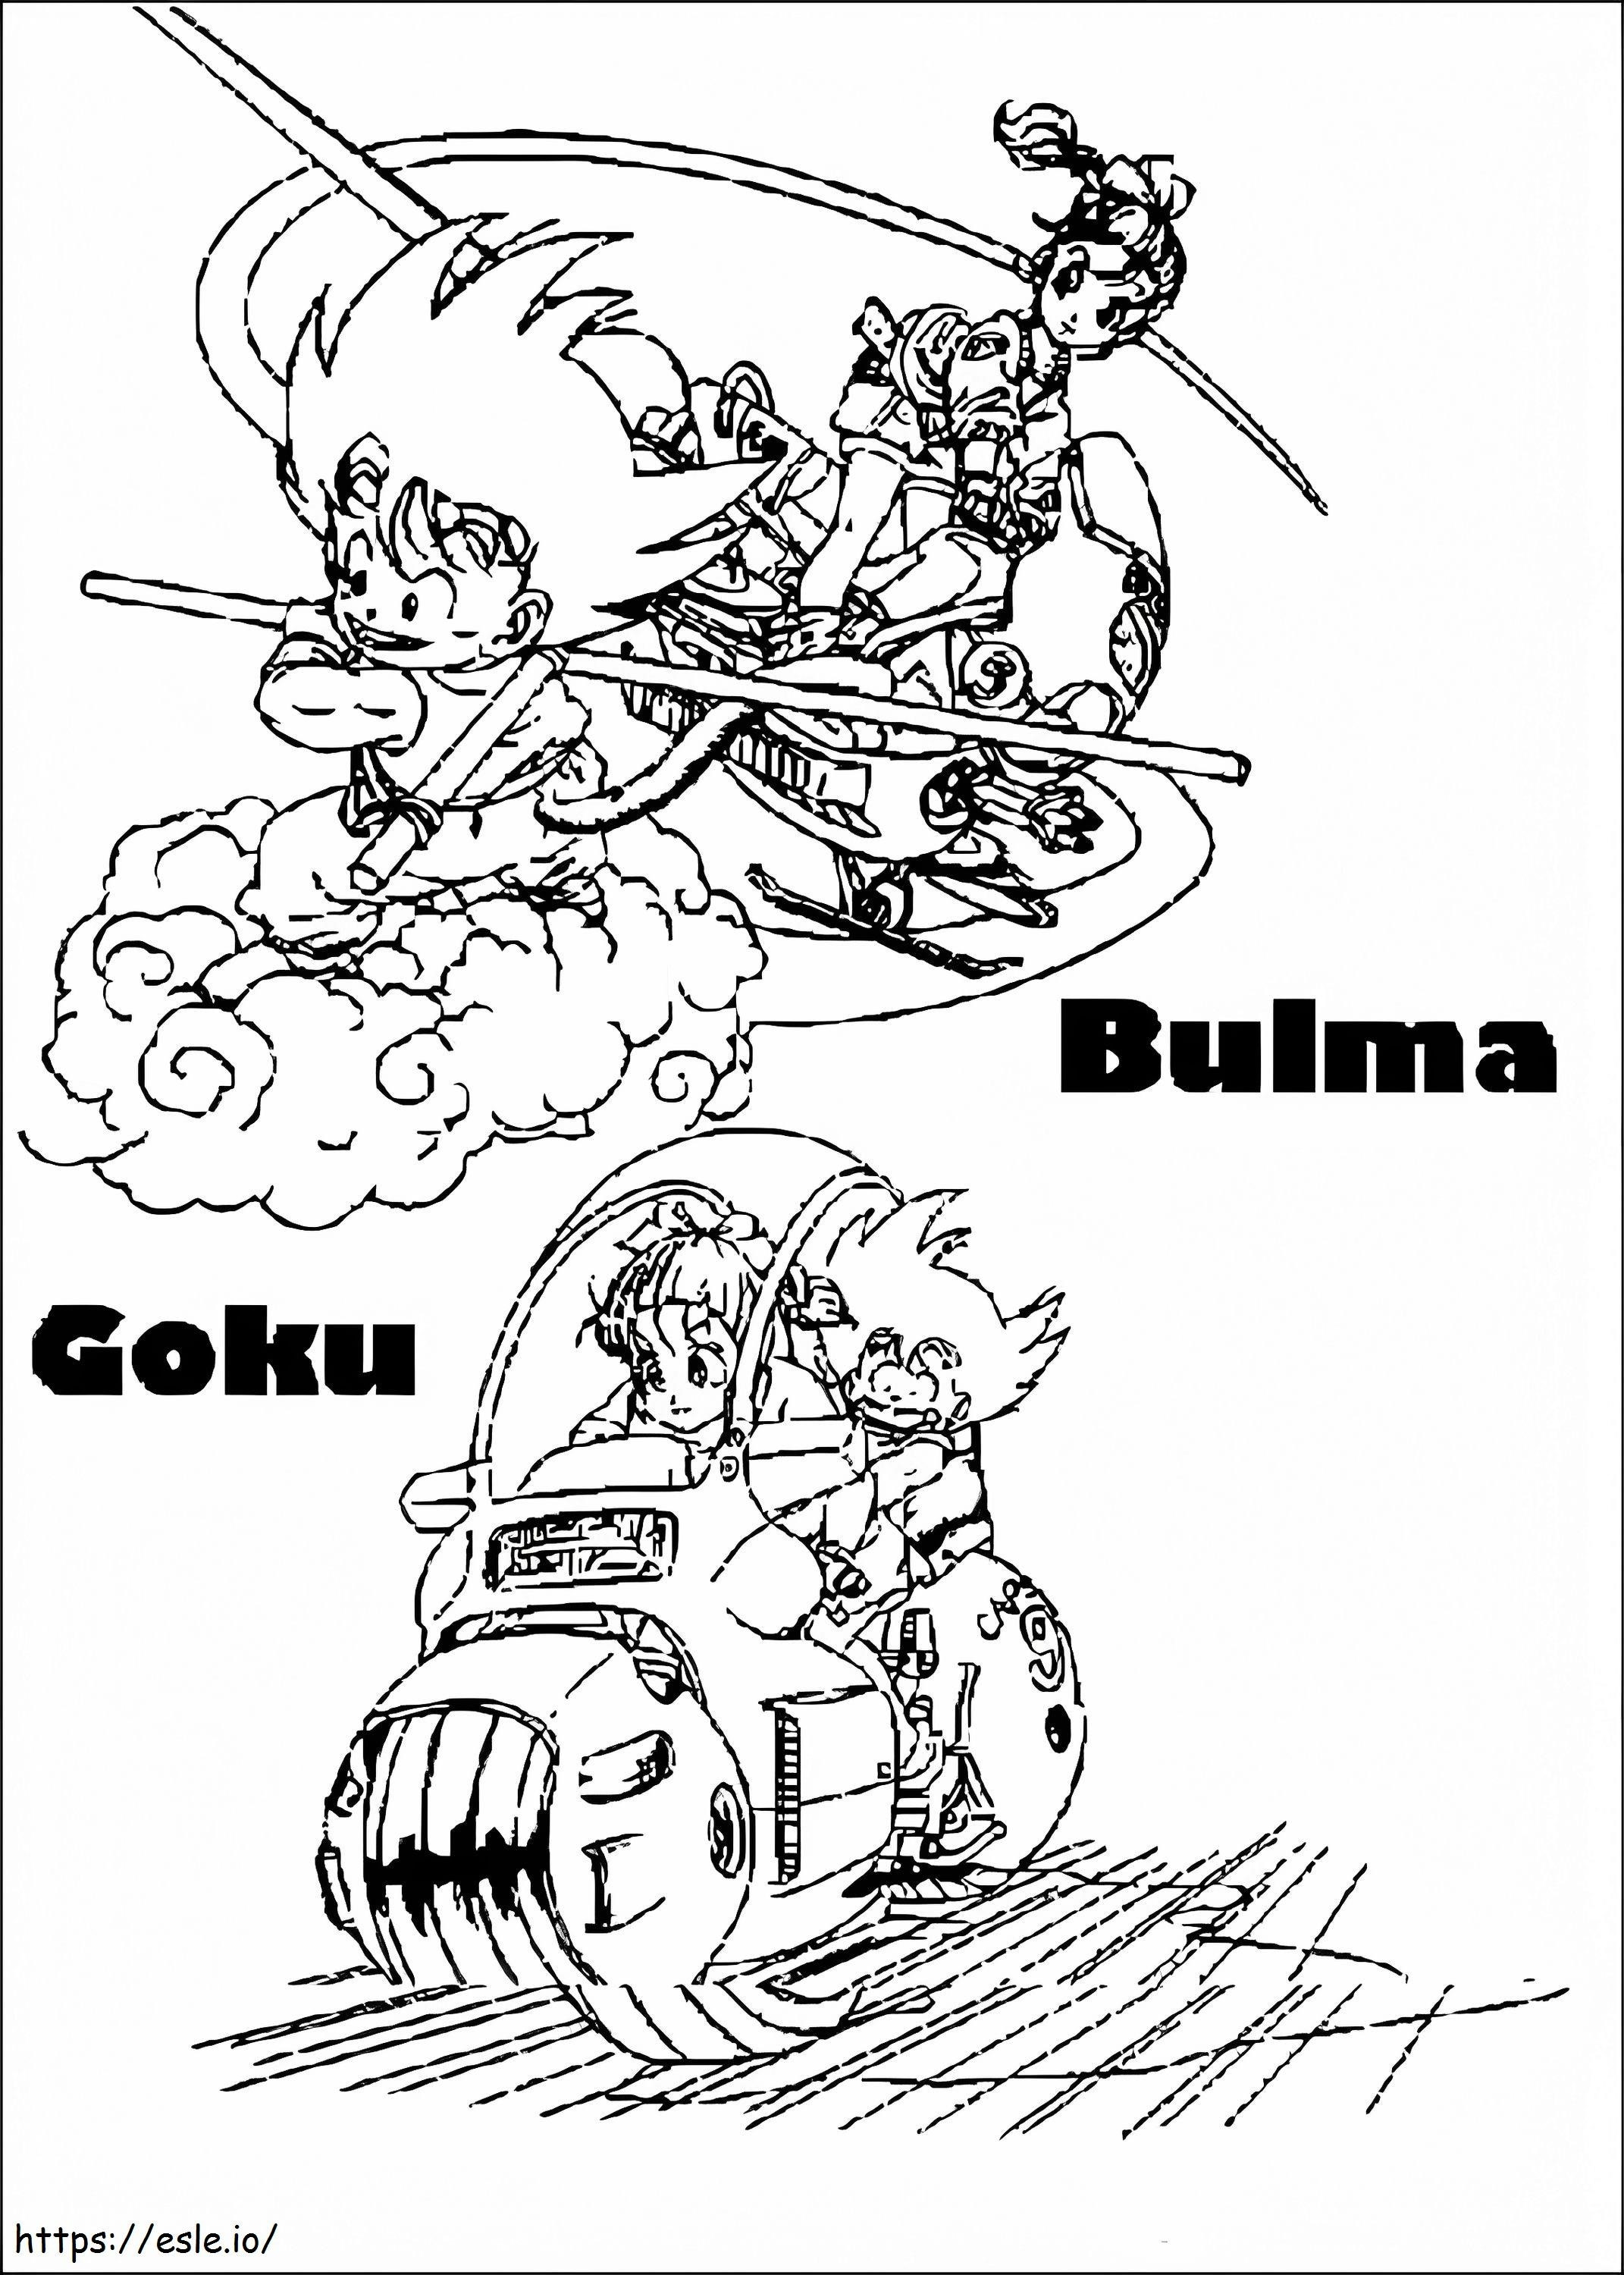 Goku en Bulma kleurplaat kleurplaat